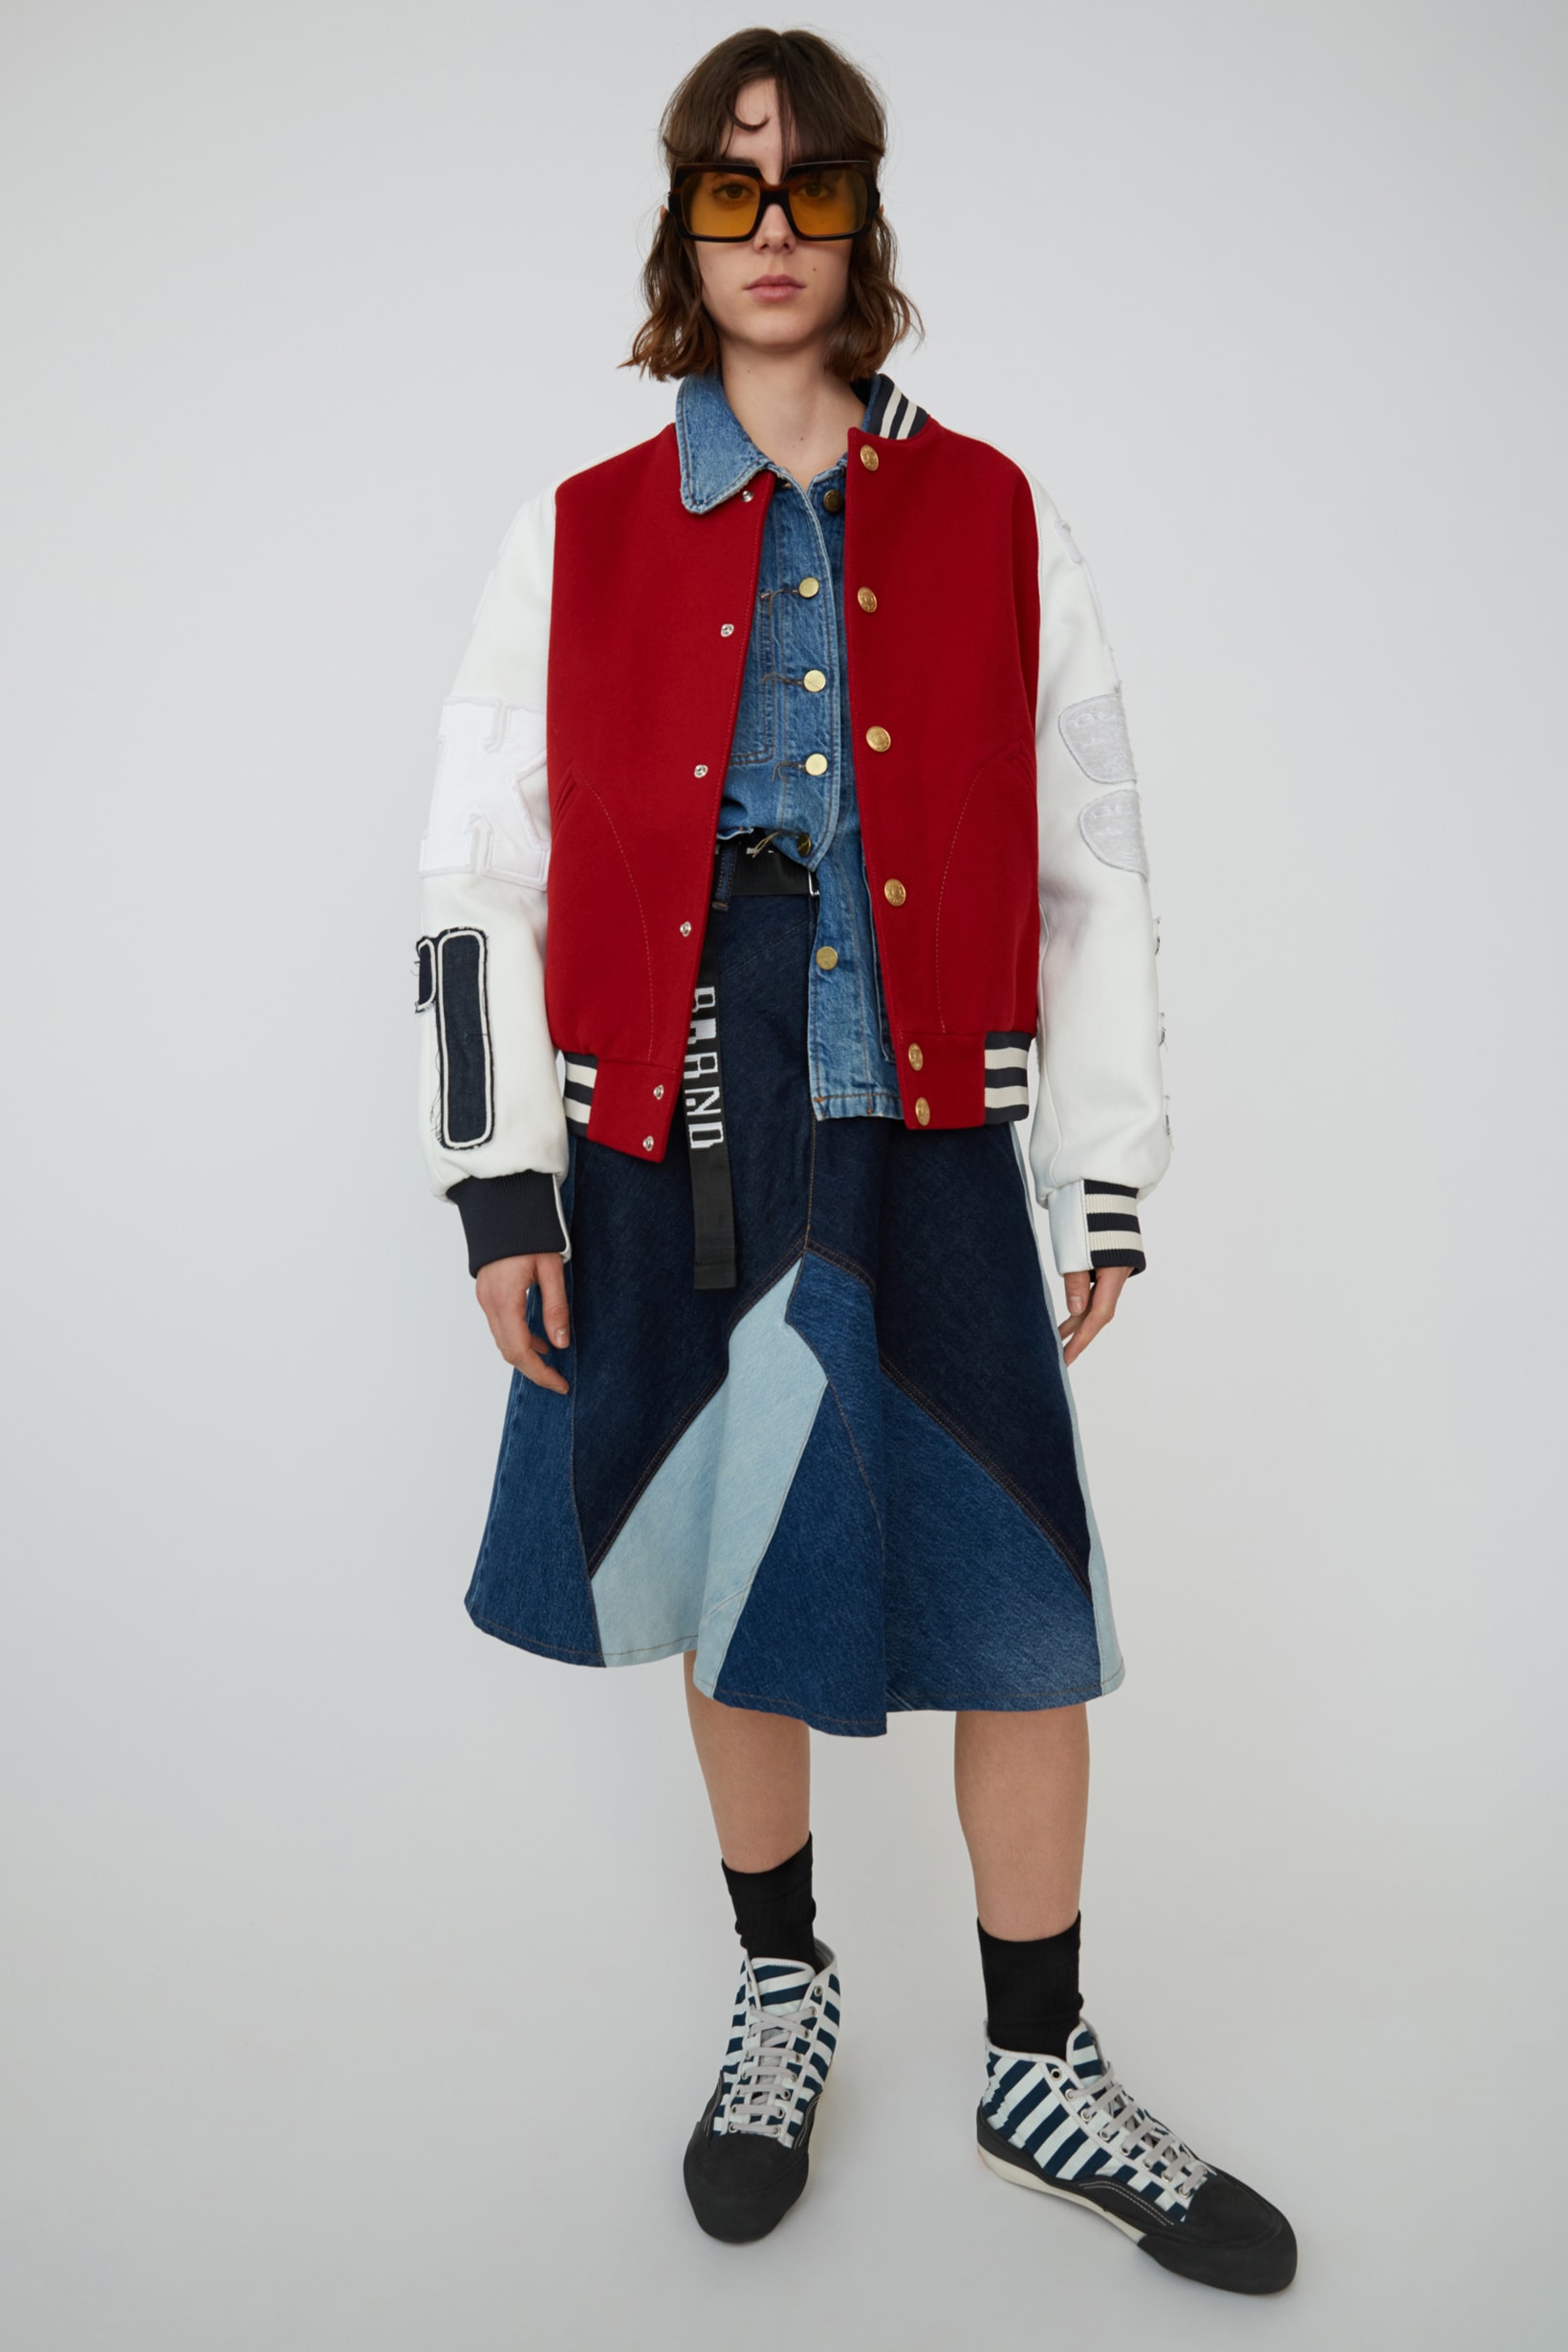 Acne Studios Spring Summer 2019 Denim Collection Bomber Jacket Red Skirt Blue